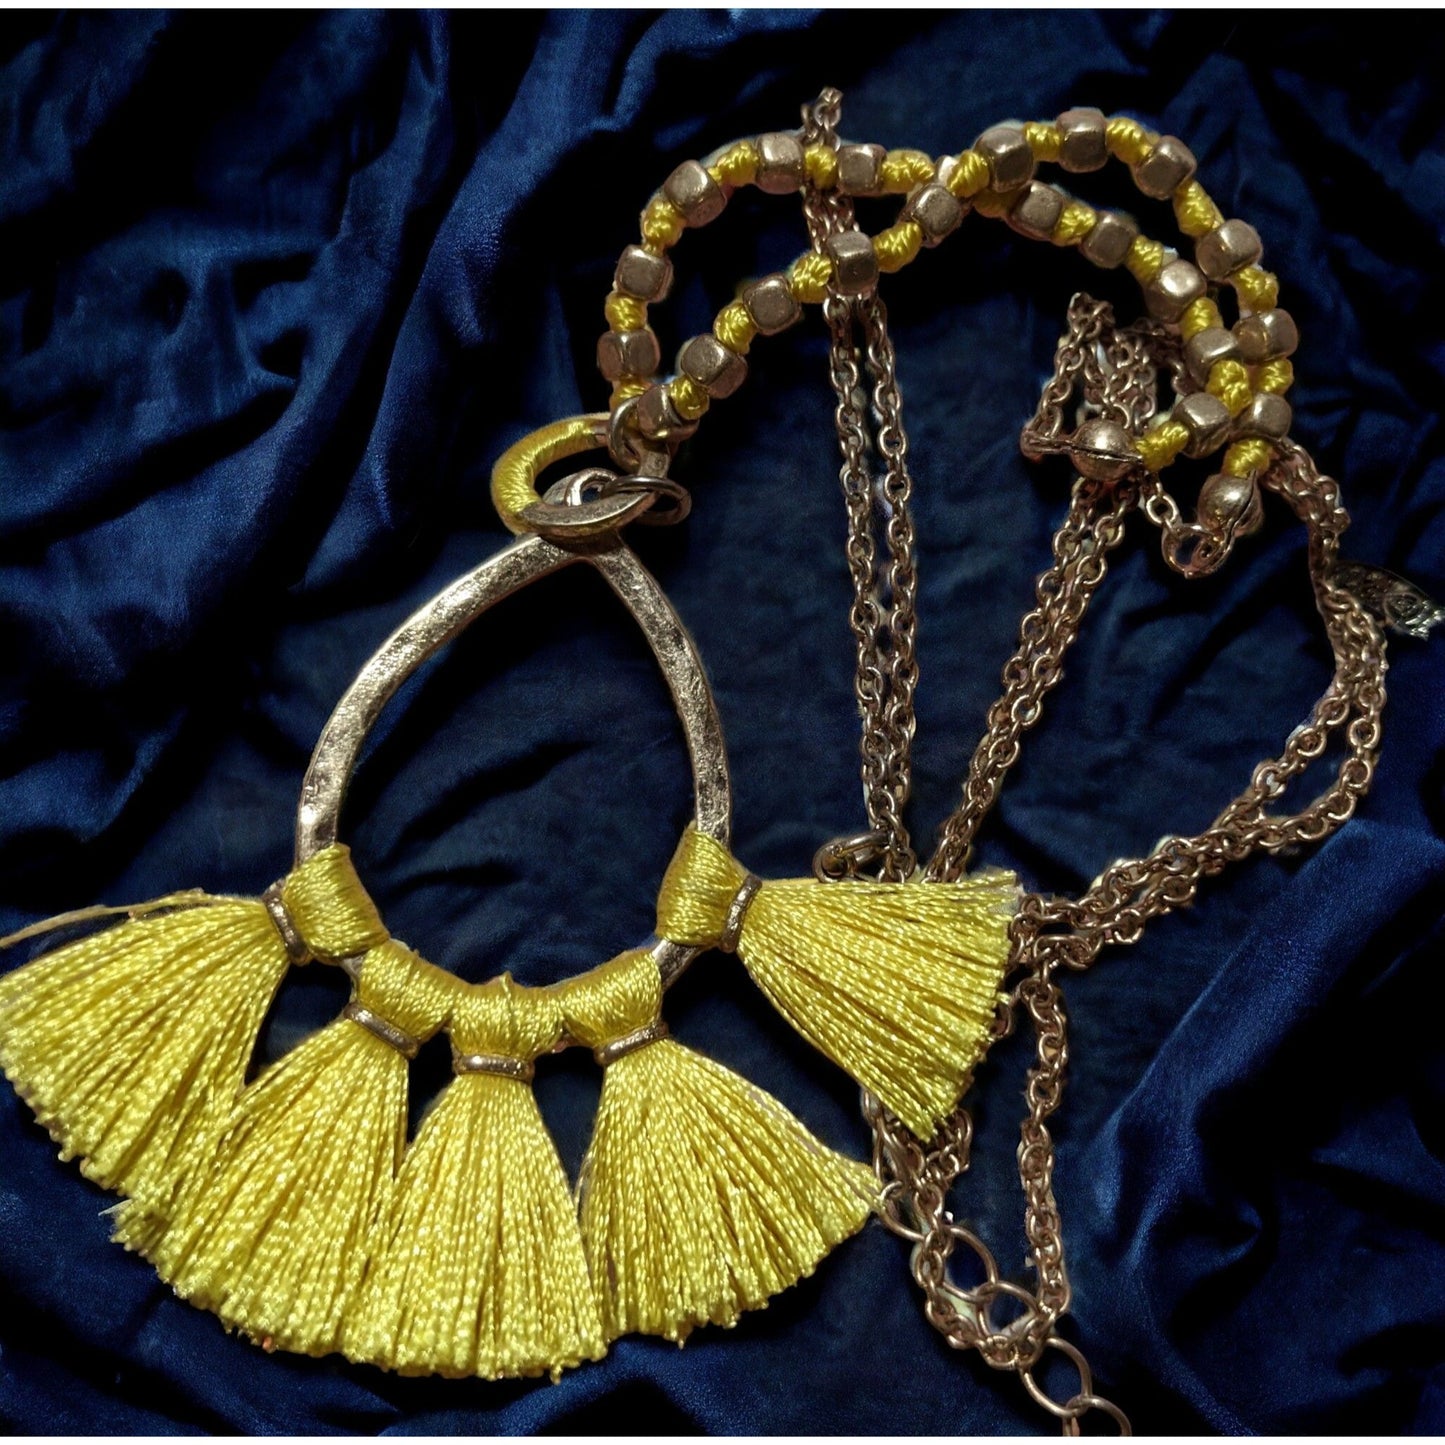 Yellow Tassel Pendant Necklace